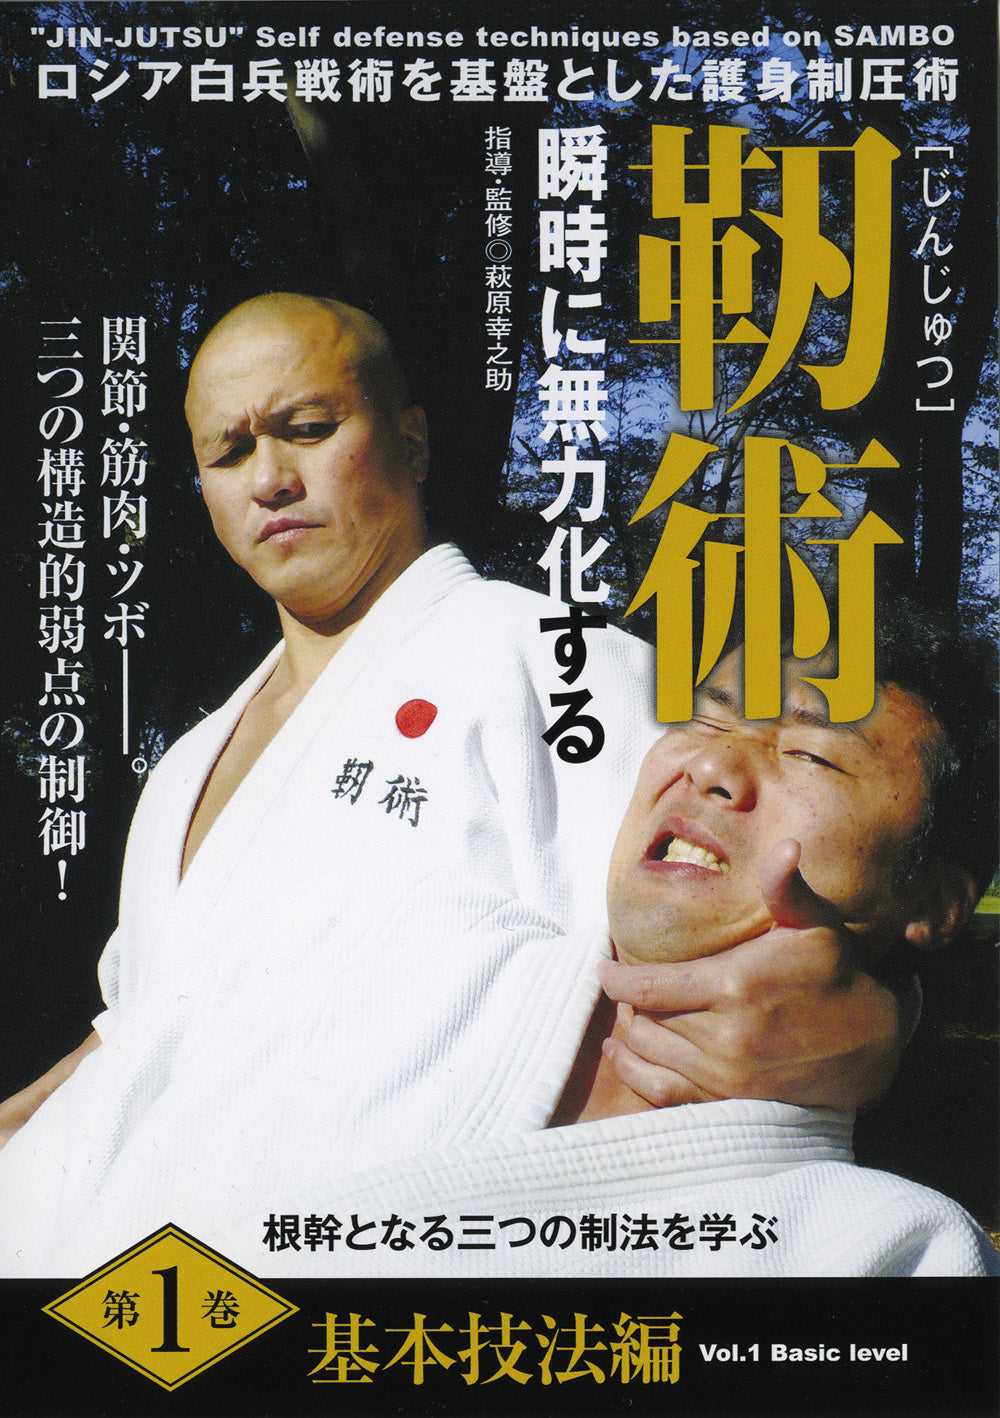 Junjutsu: Self Defense Based on Sambo Vol 1 DVD by Konosuke Hagiwara